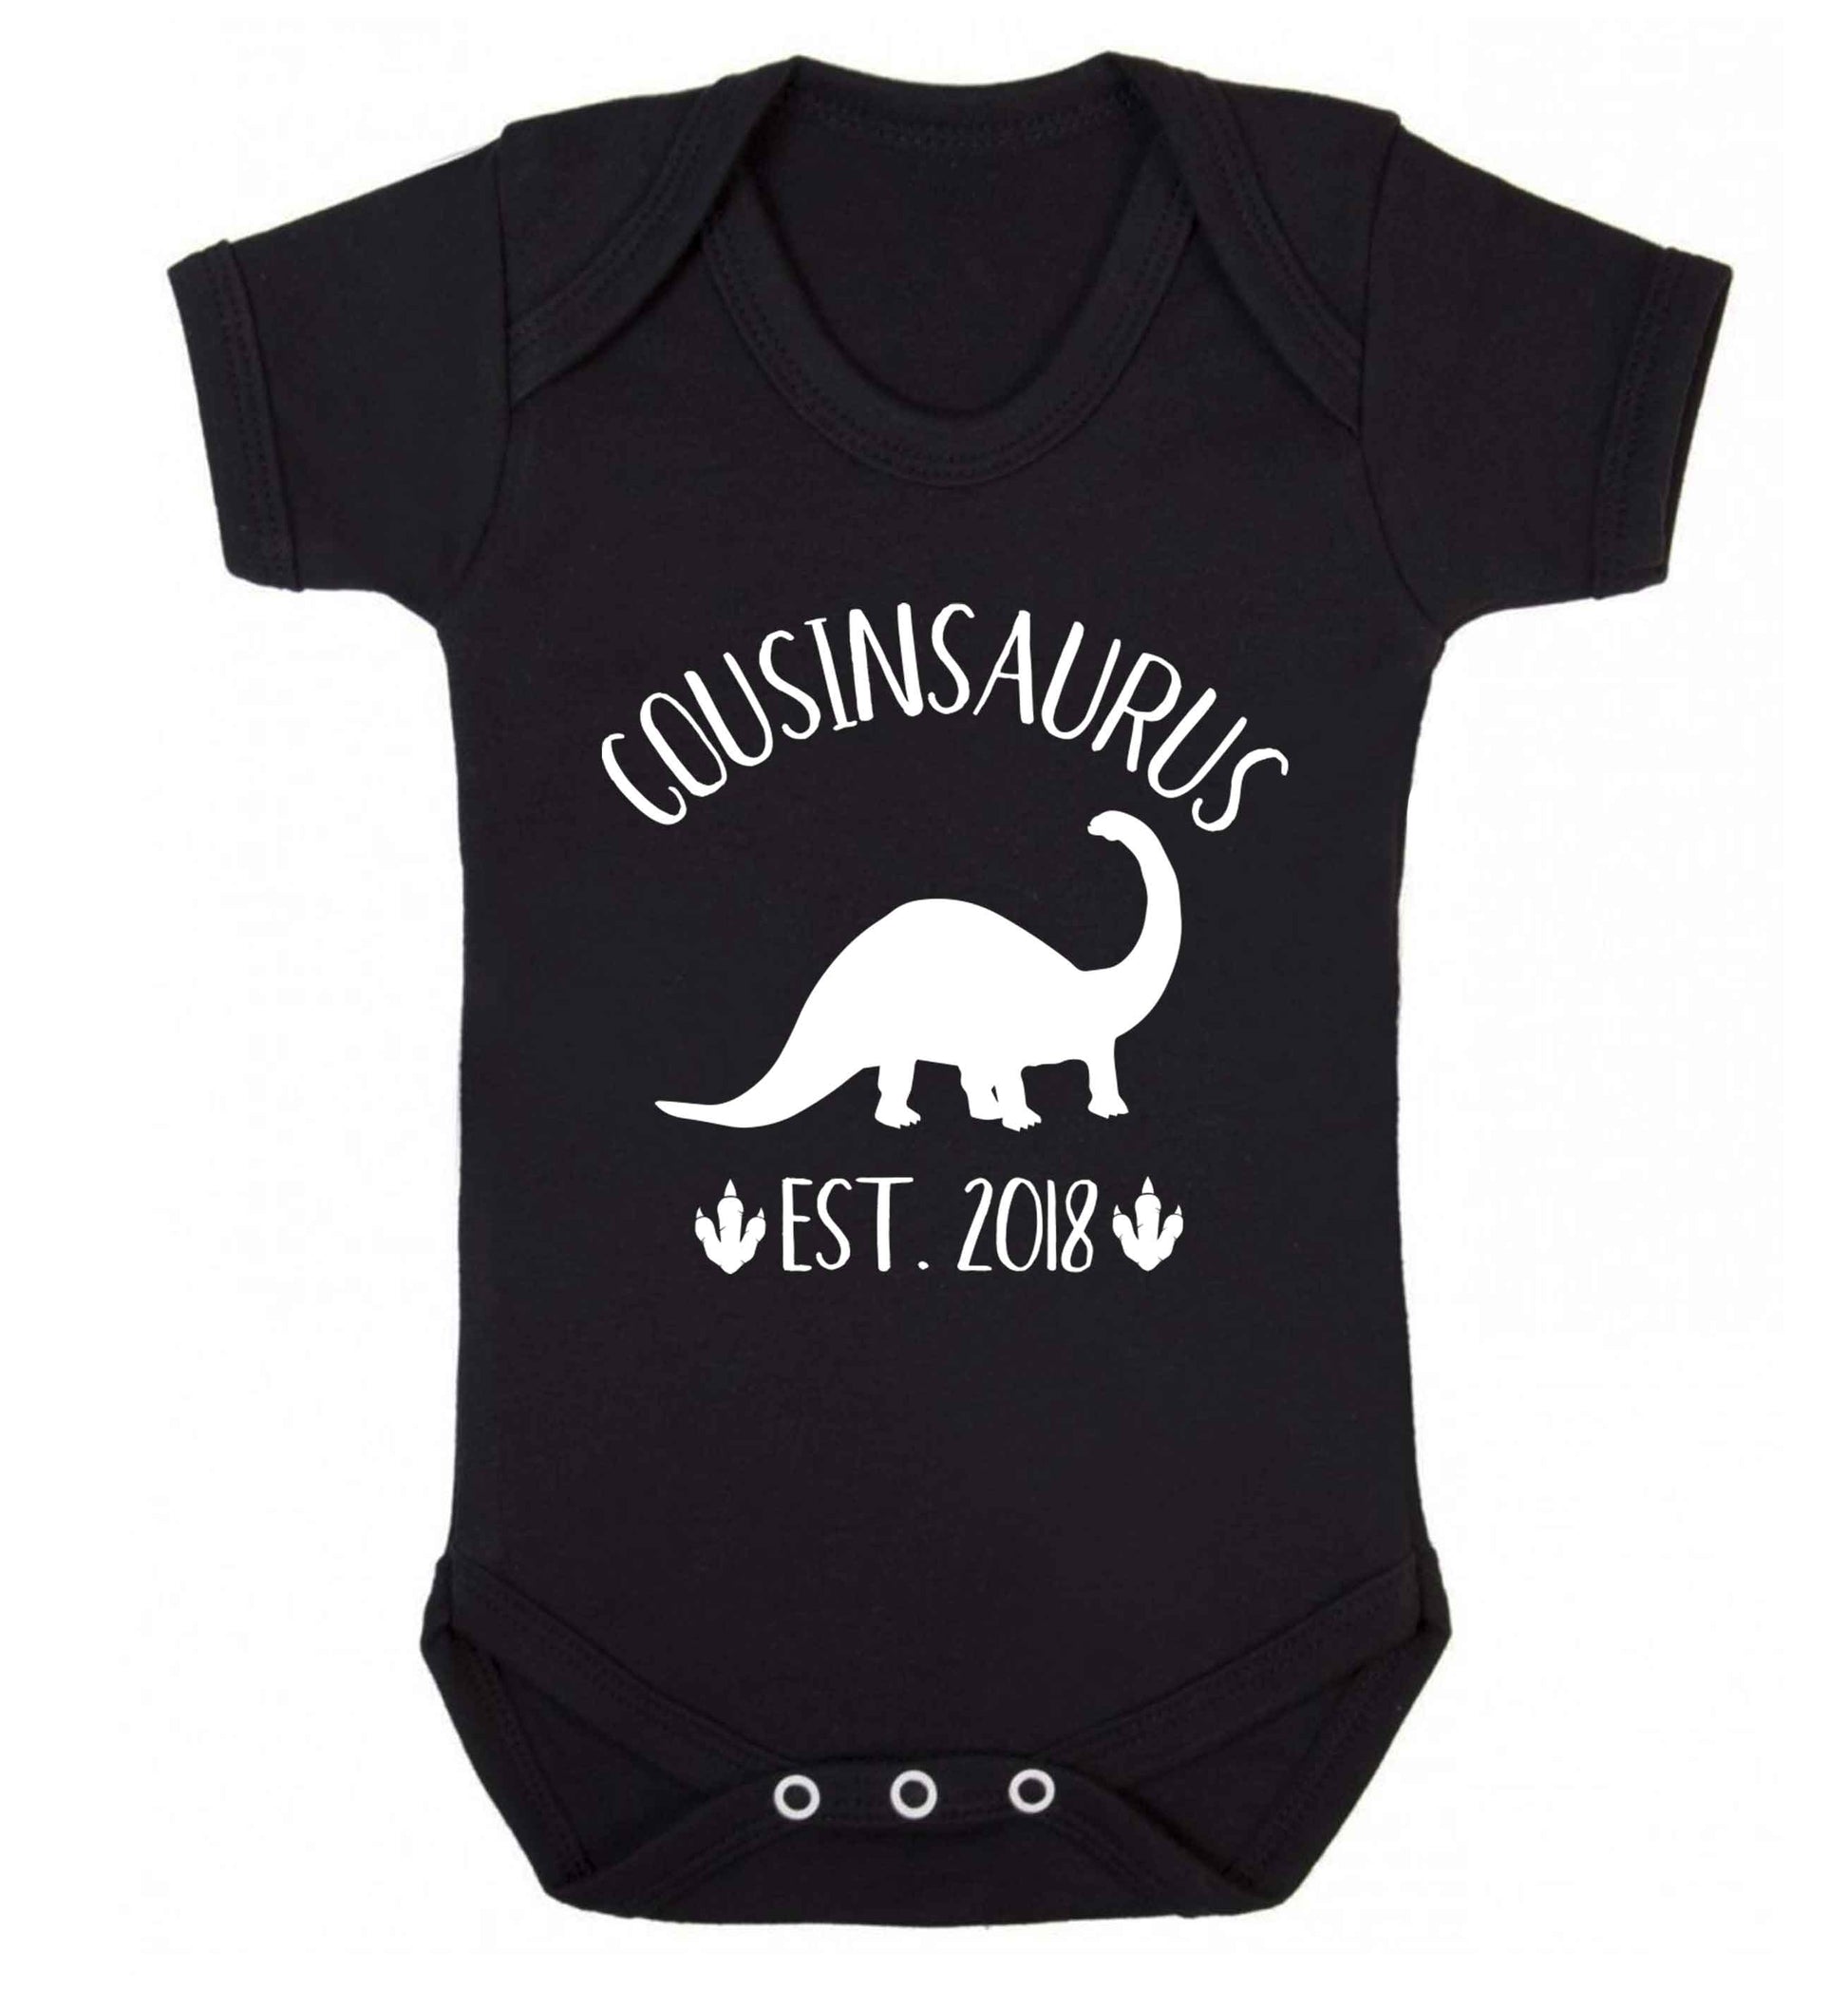 Personalised cousinsaurus since (custom date) Baby Vest black 18-24 months